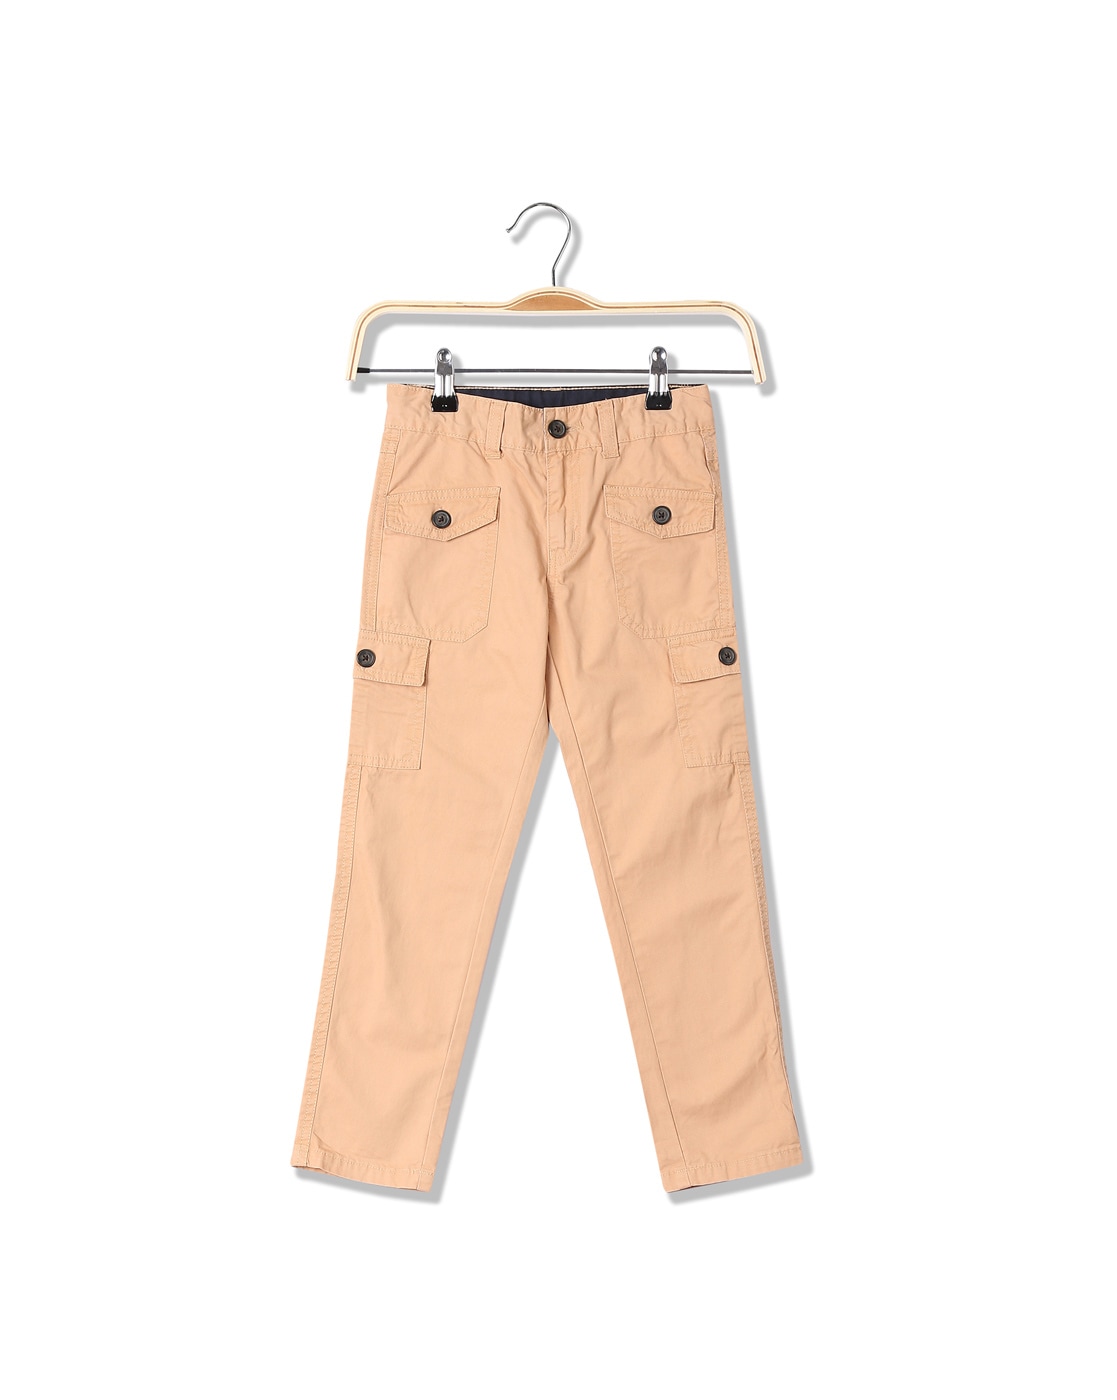 Buy Beige Trousers  Pants for Boys by CHEROKEE Online  Ajiocom